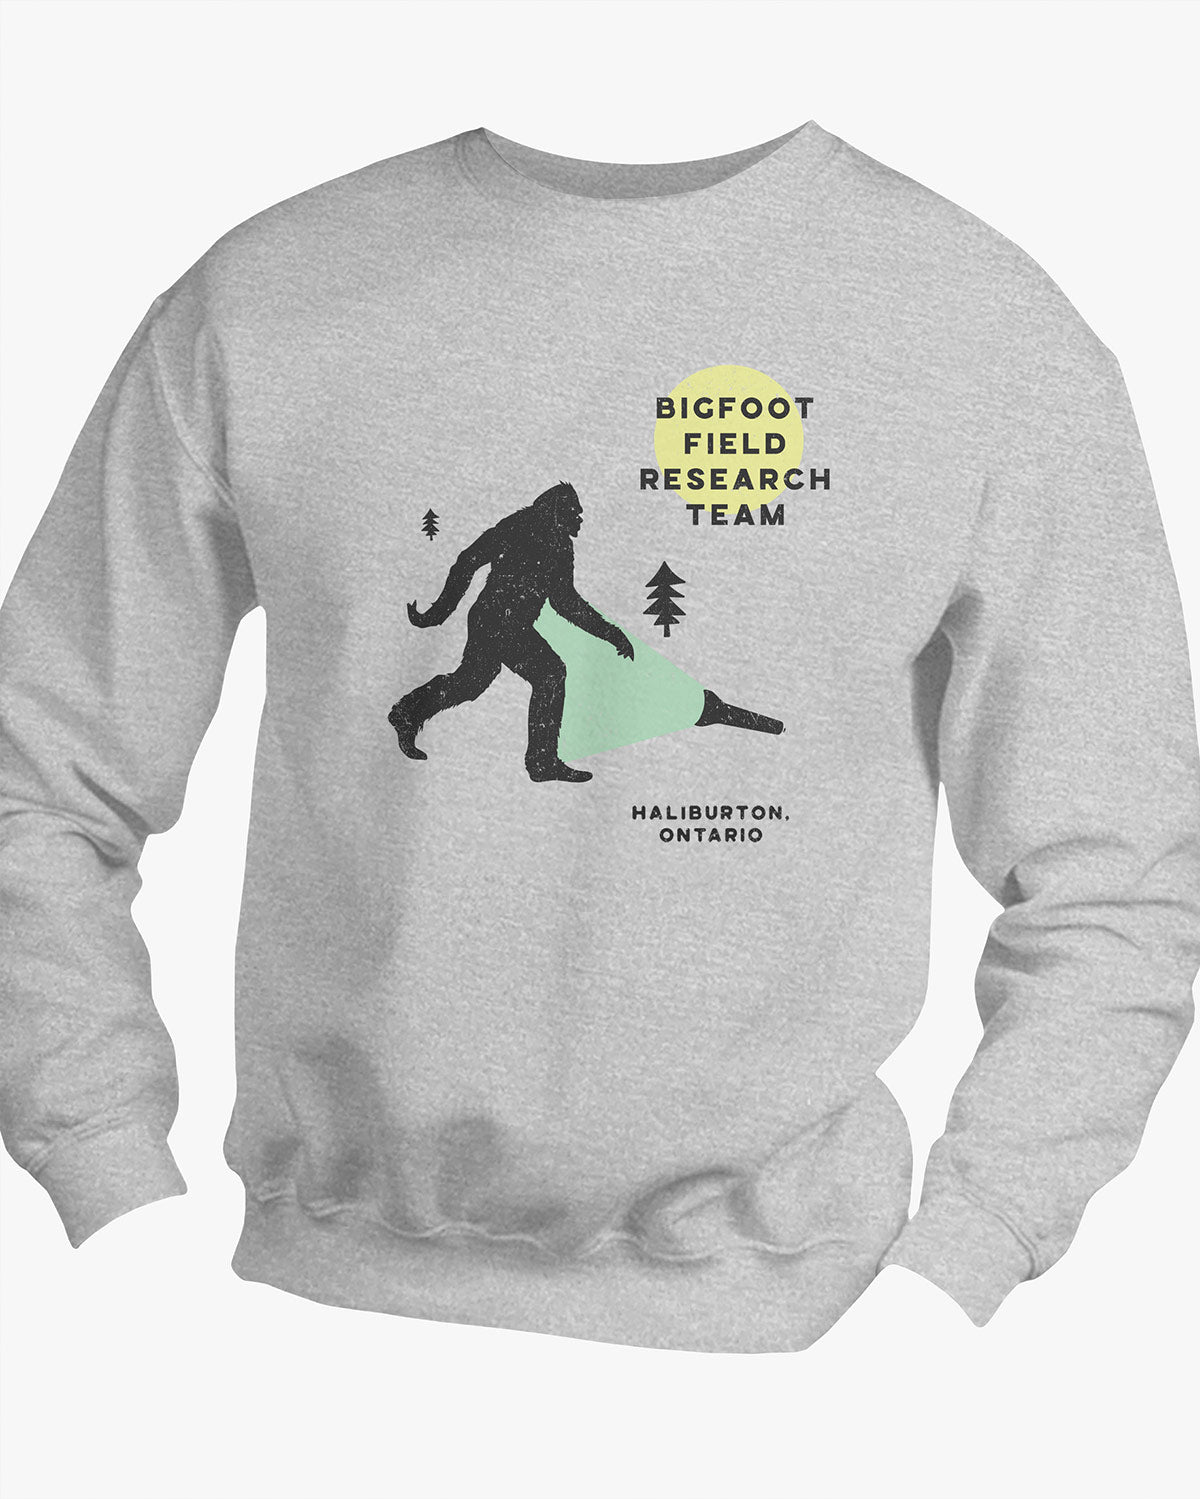 Bigfoot Research Team - Haliburton - Sweater